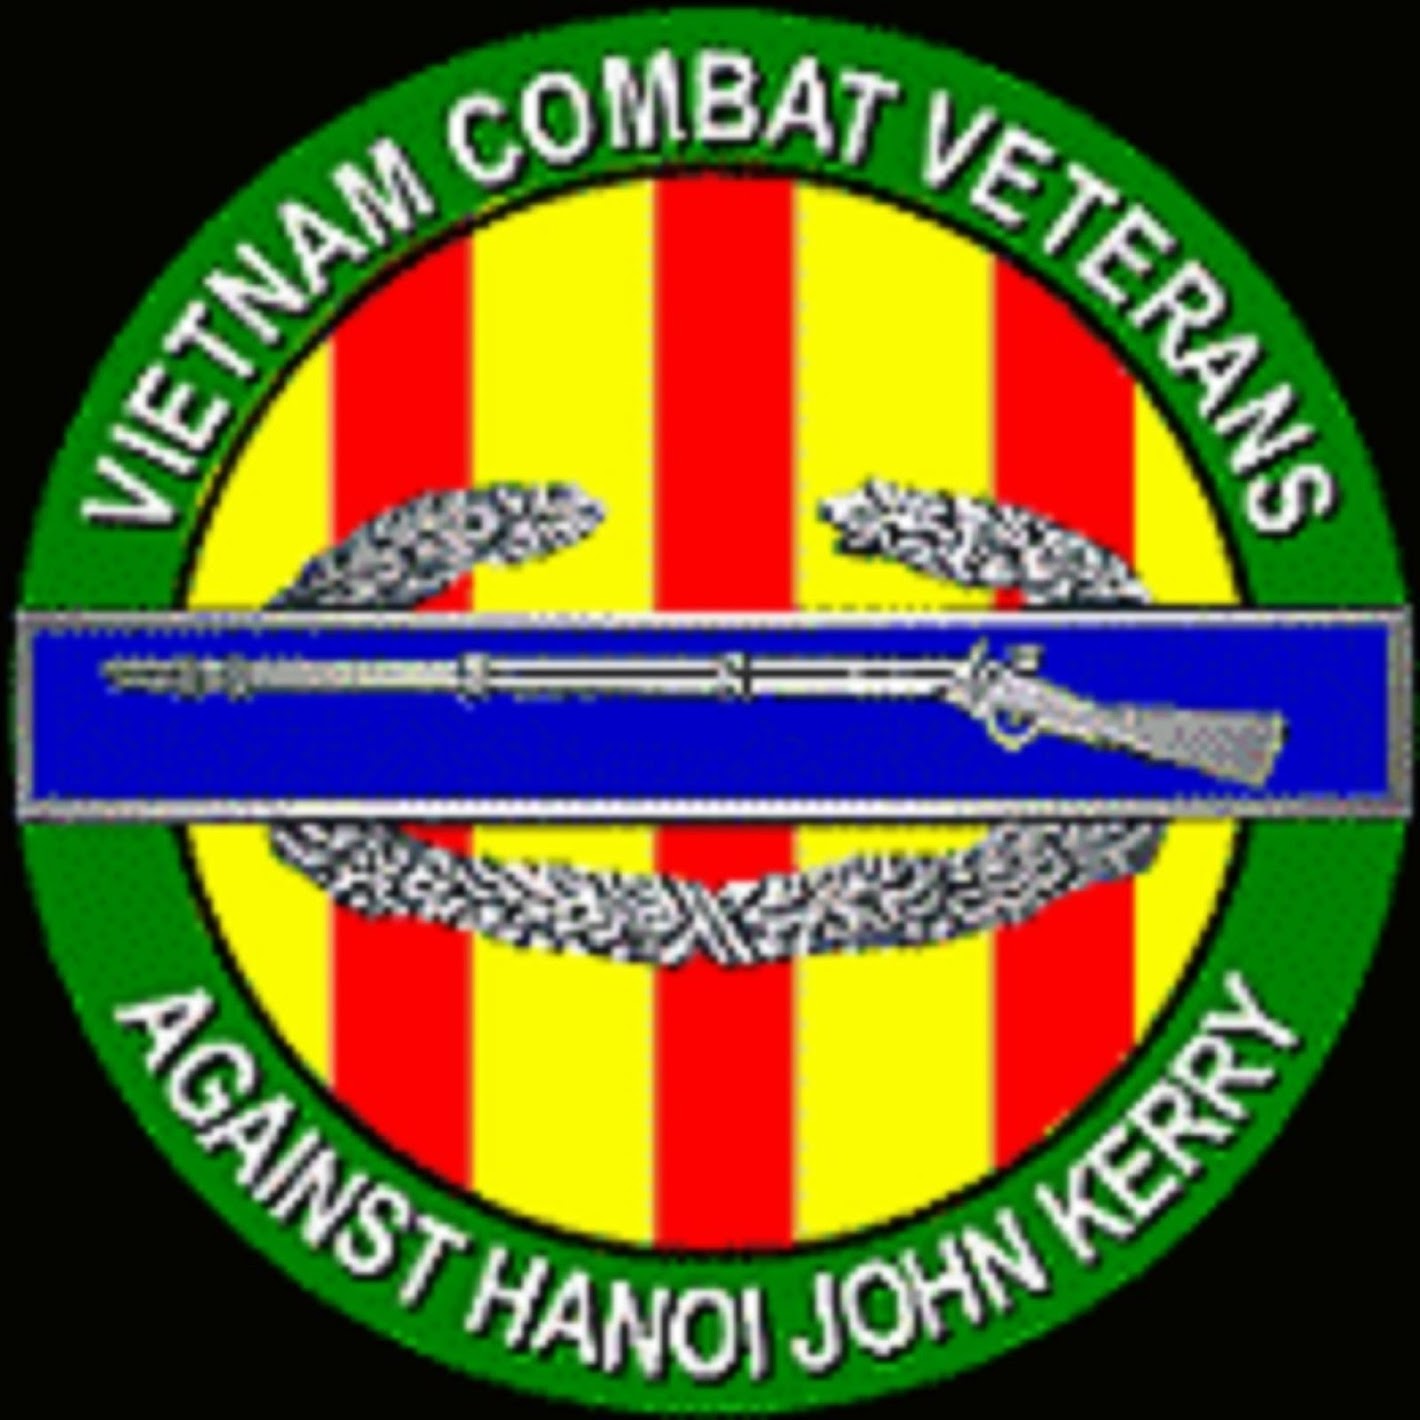 VIETNAM COMBAT VETERANS AGAINST HANOI JOHN KERRY